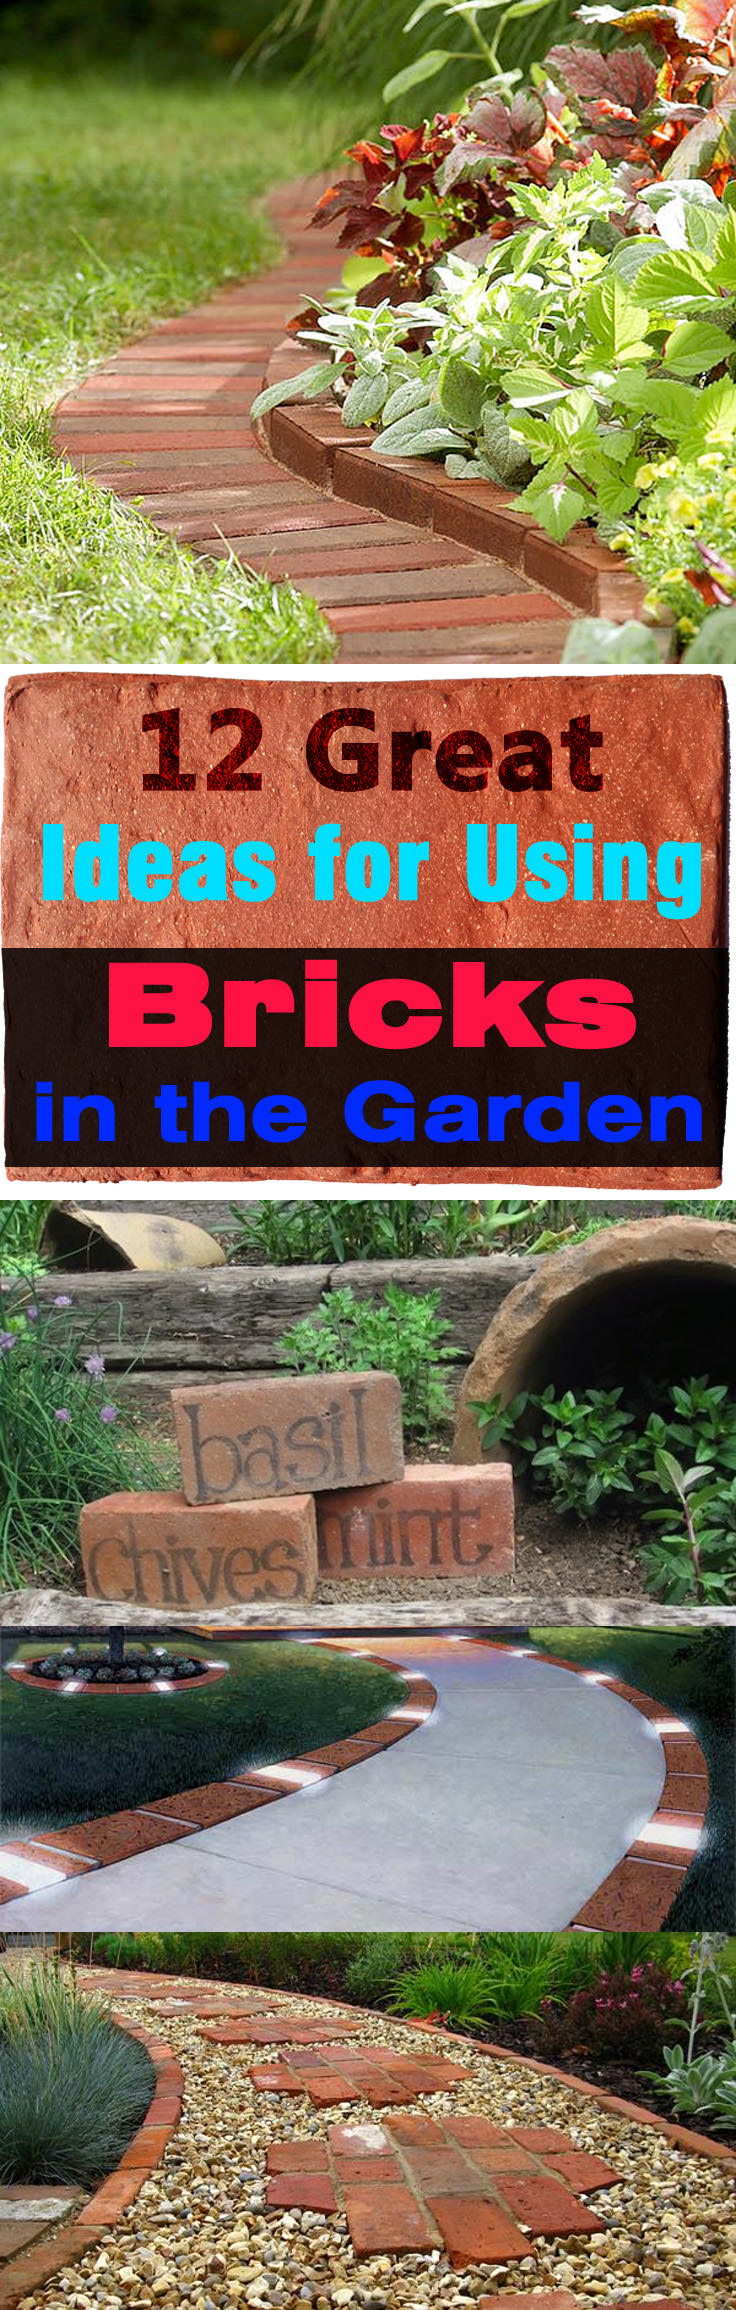 Using Bricks in the Garden | Smart Ideas for Garden Design